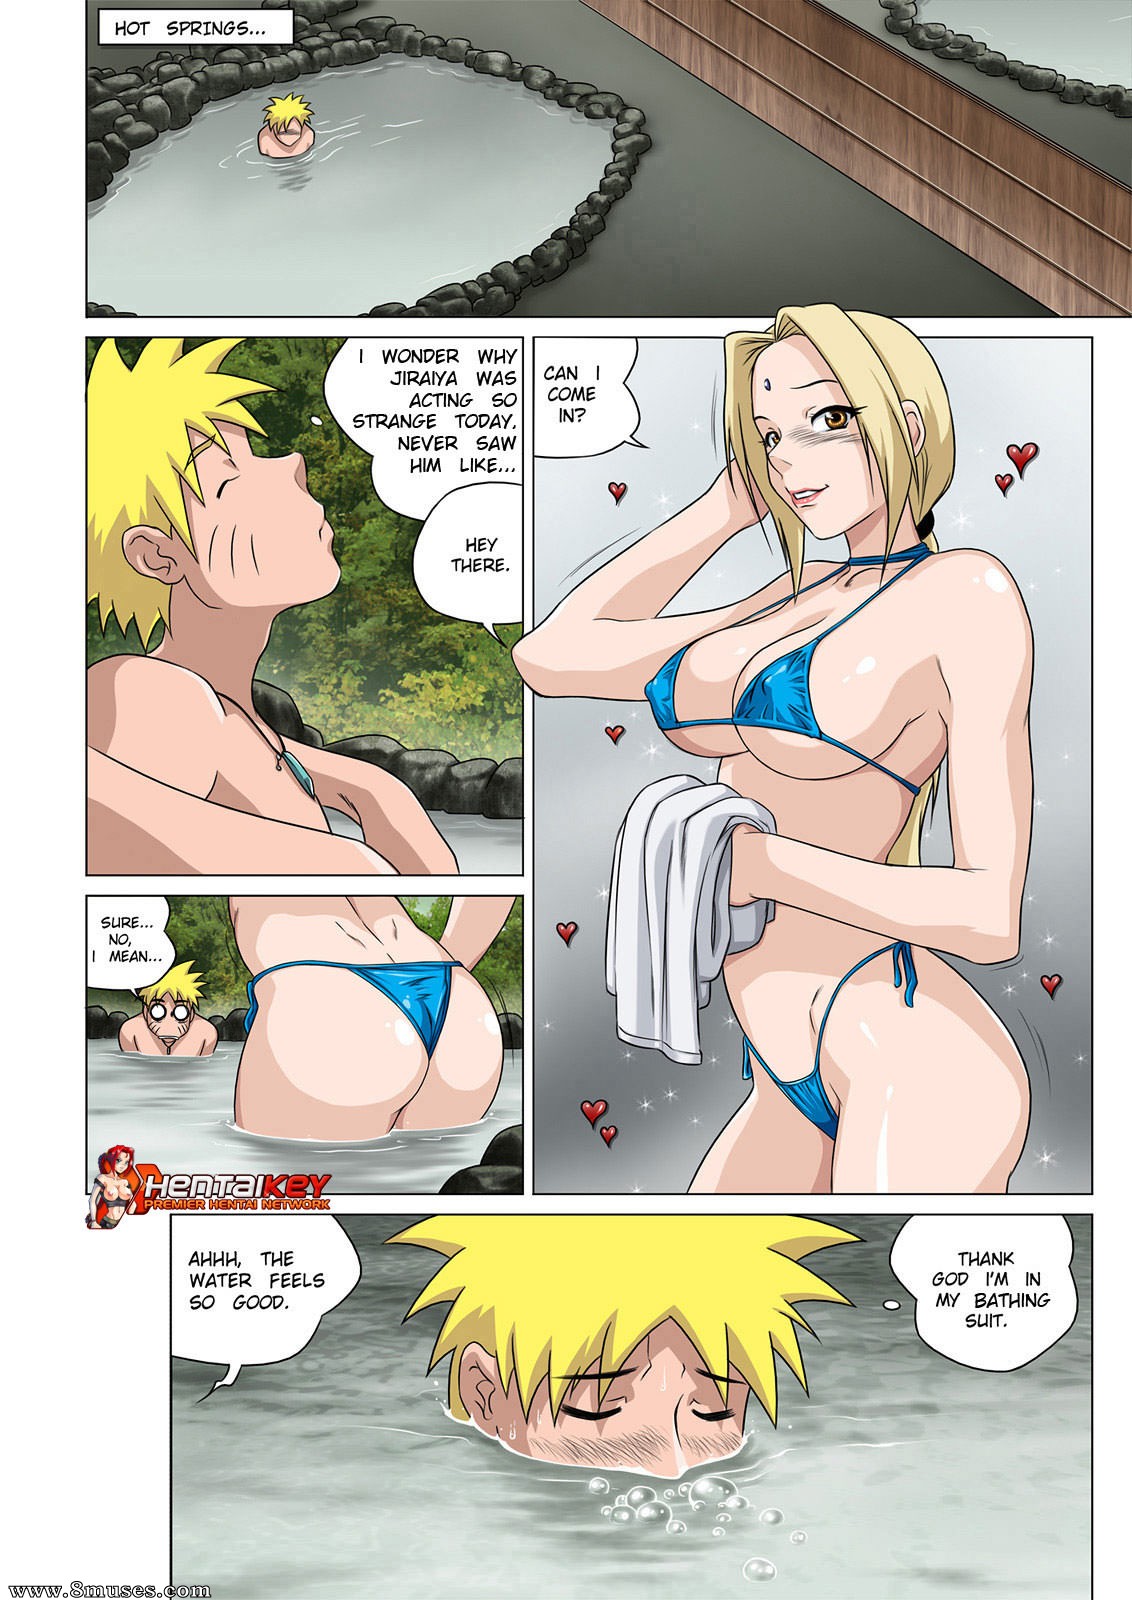 Tsunade and Naruto Porn Issue 1 - 8muses Comics - Sex Comics and Porn  Cartoons